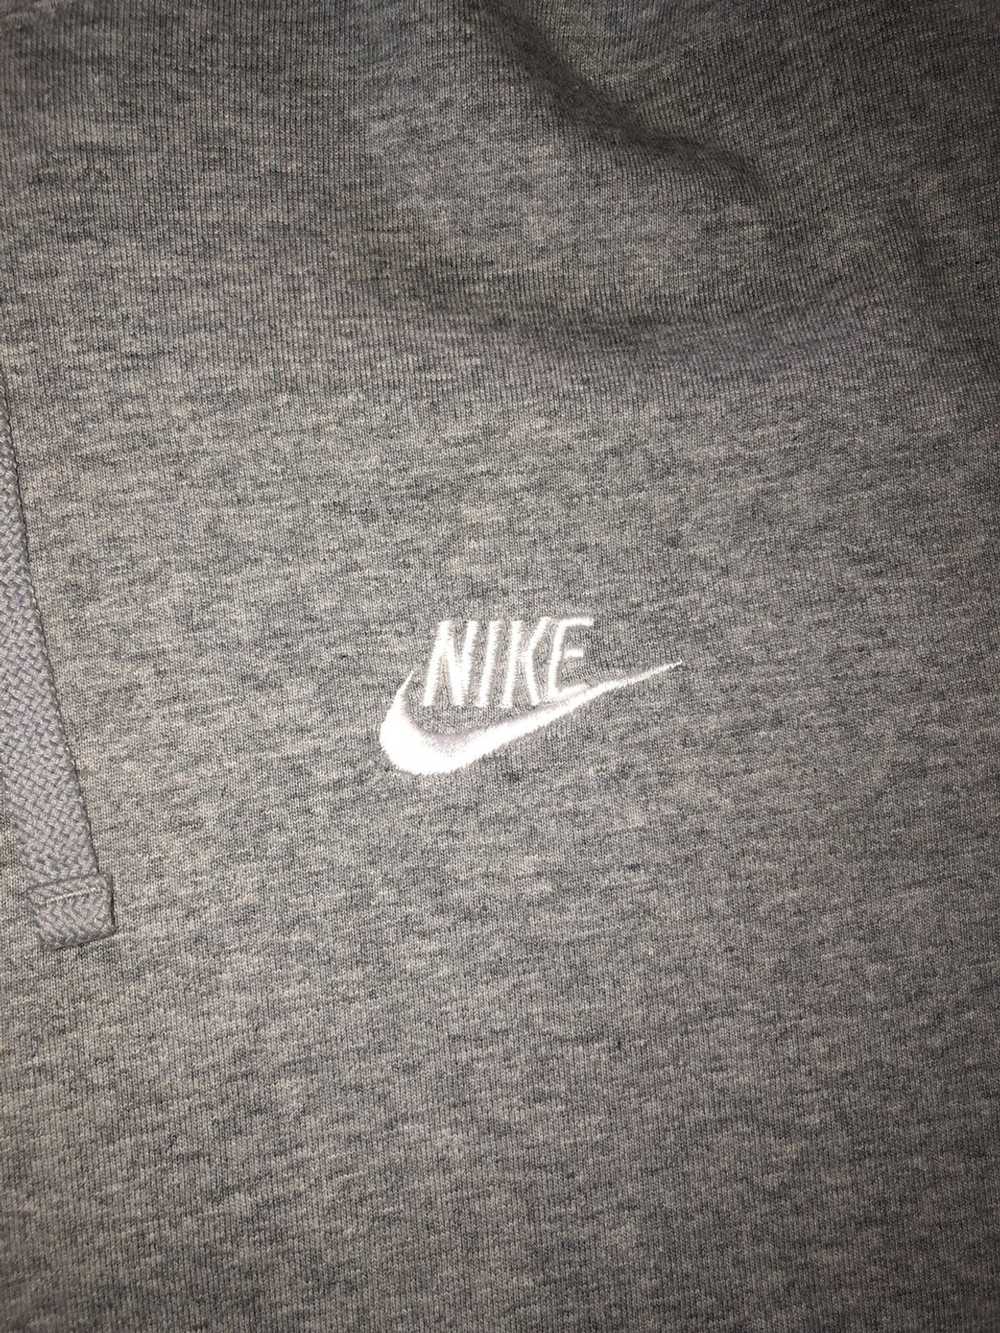 Nike Nike Shirt Hoodie - image 2